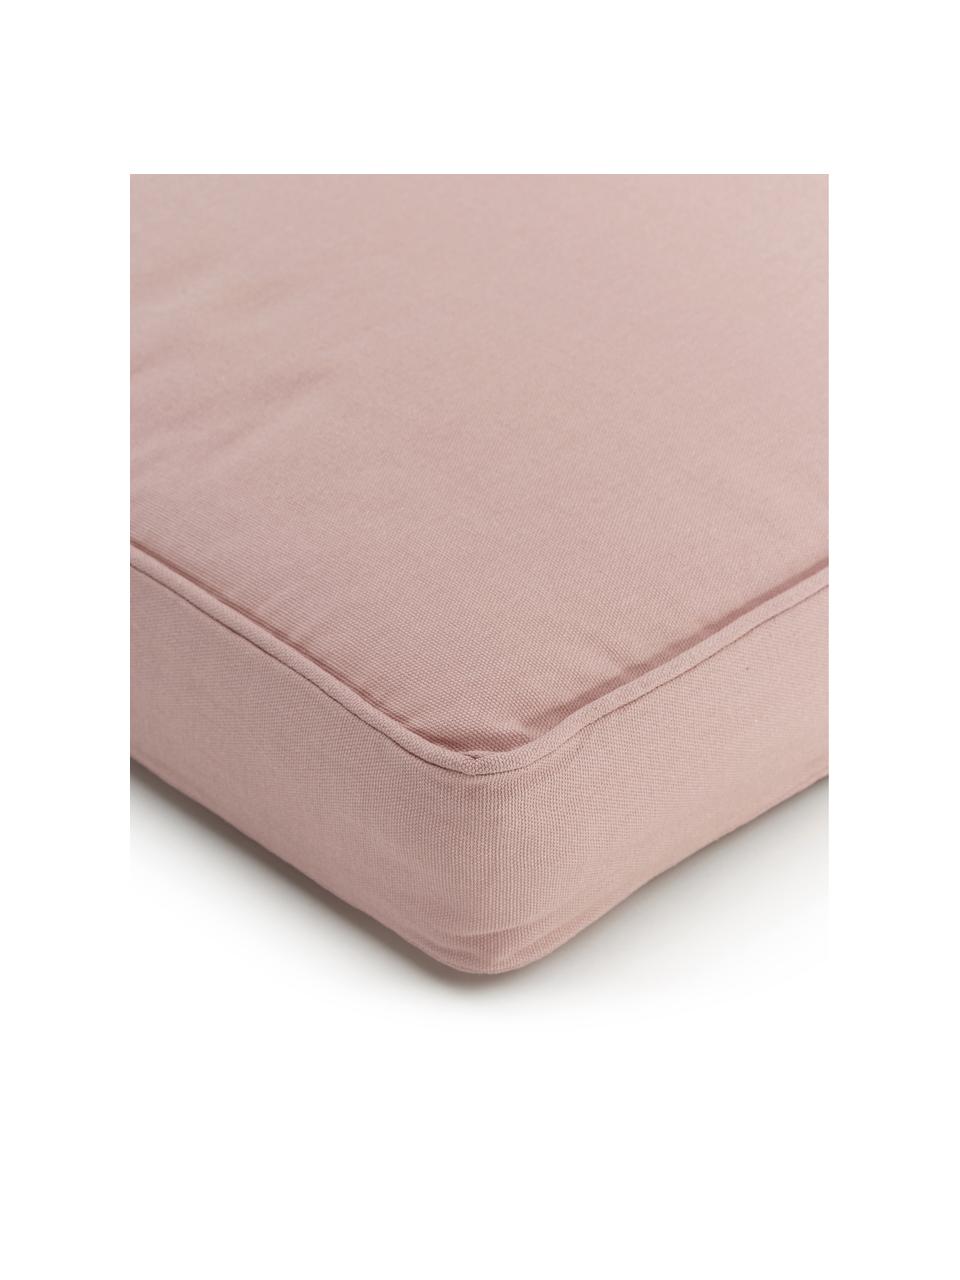 Cojín de asiento alto de algodón Zoey, Funda: 100% algodón, Rosa, An 40 x L 40 cm